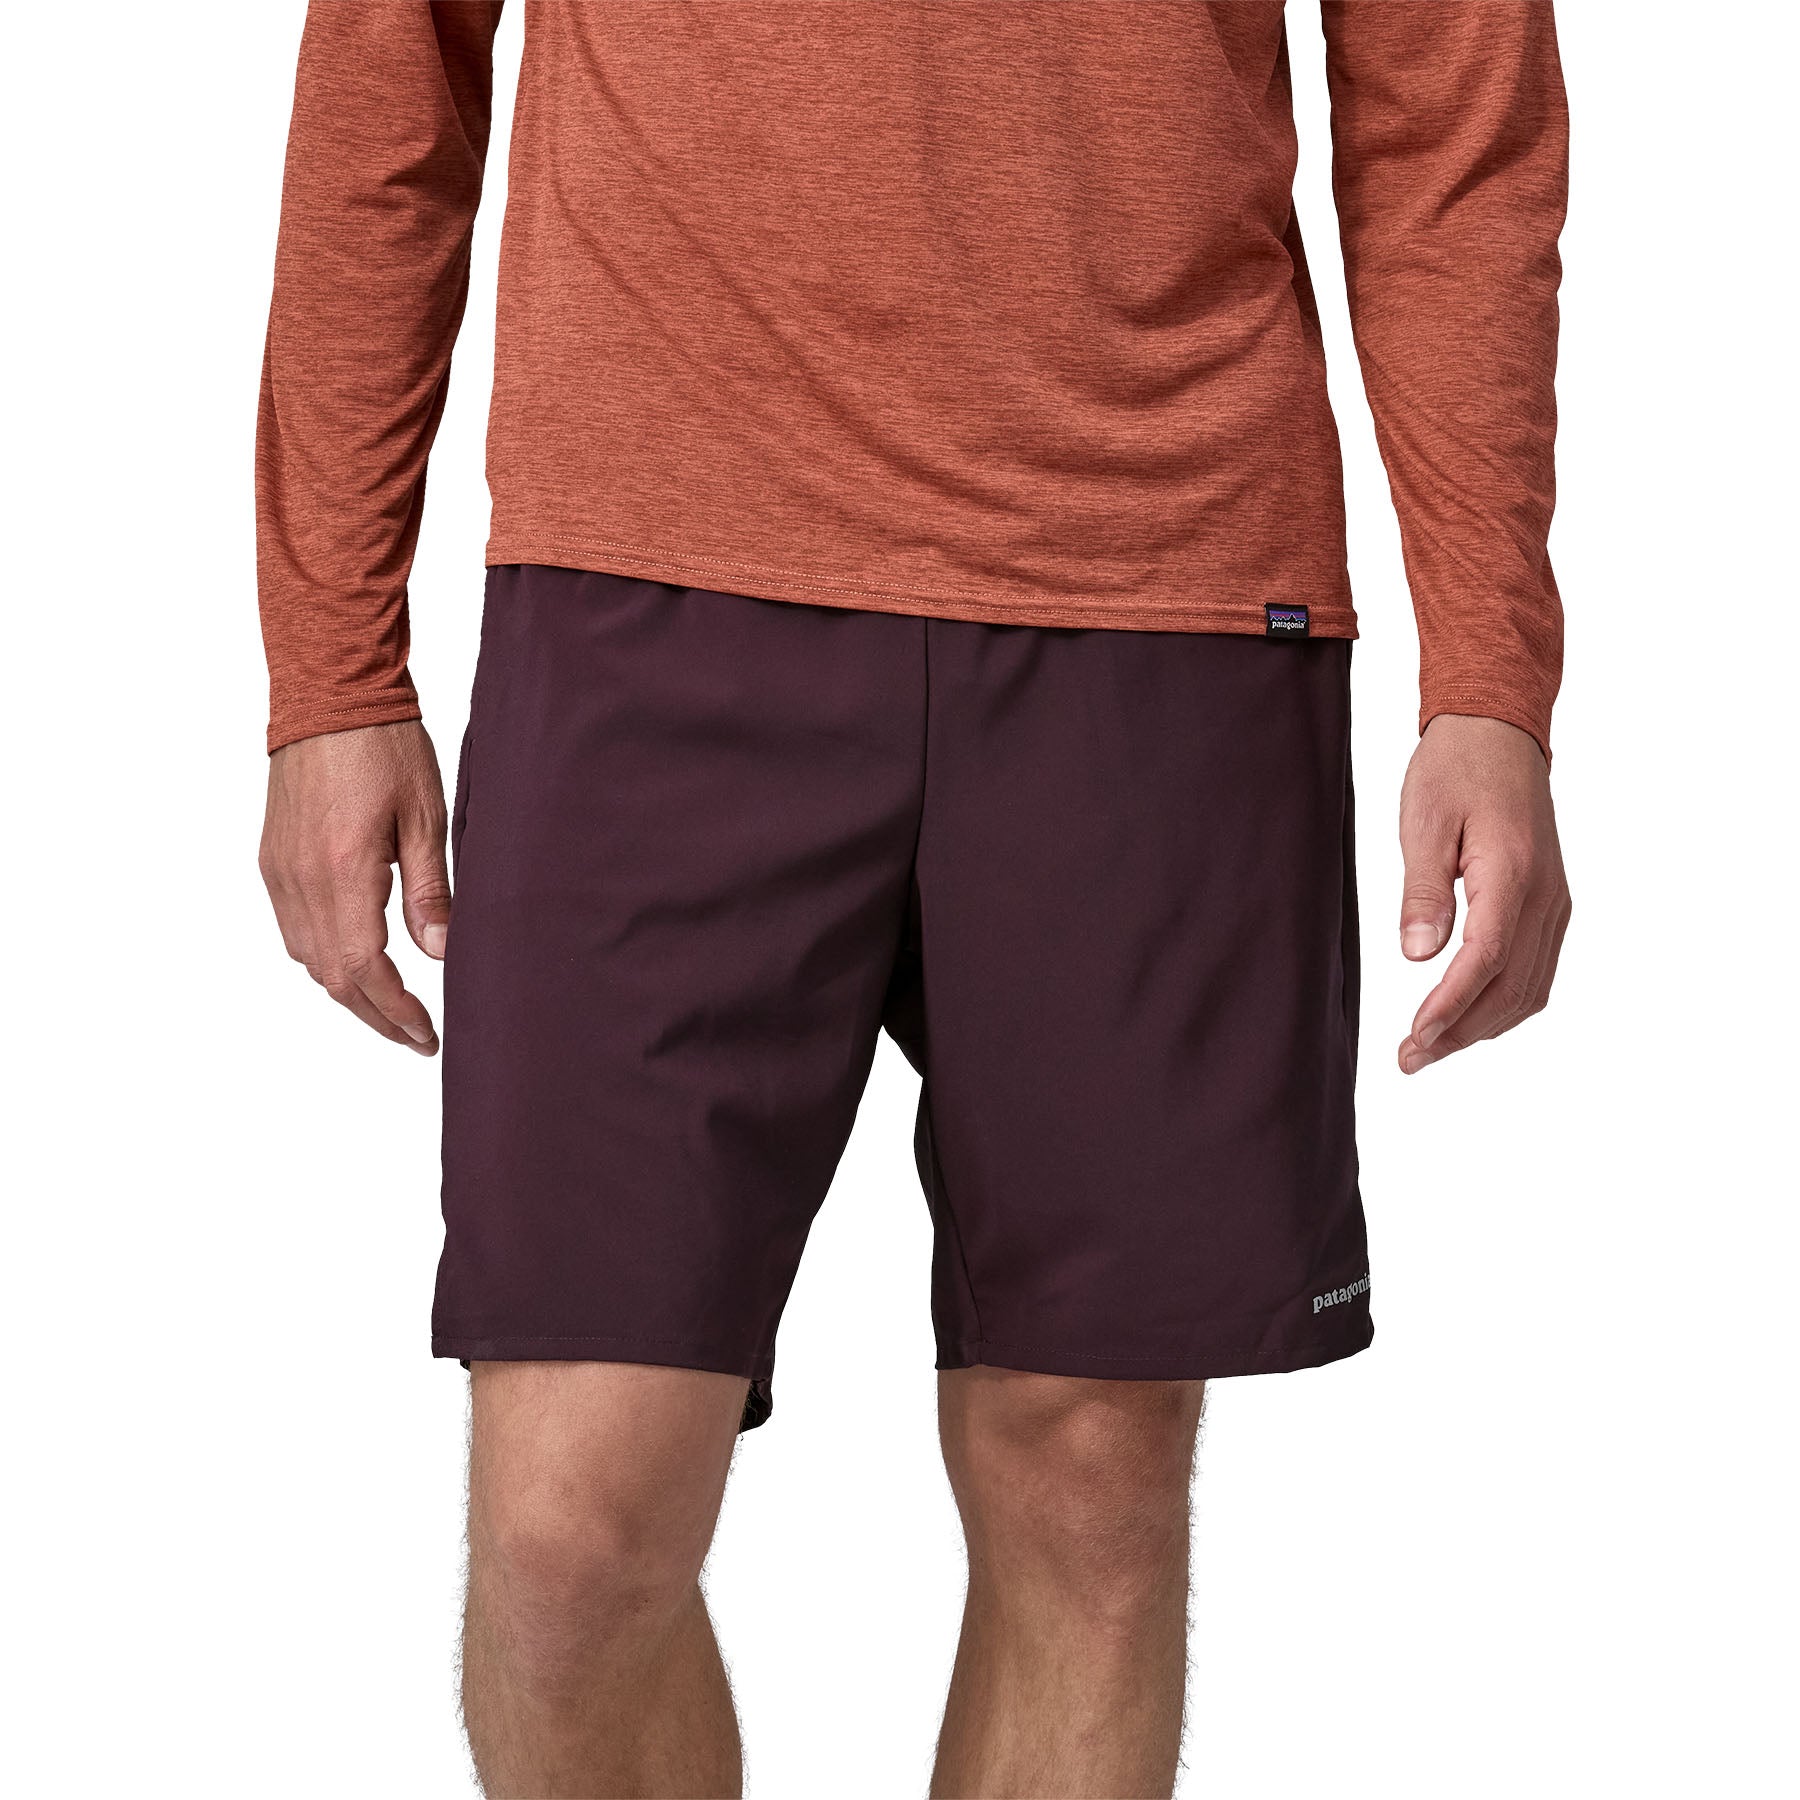 Men's Multi Trails Shorts - 8"